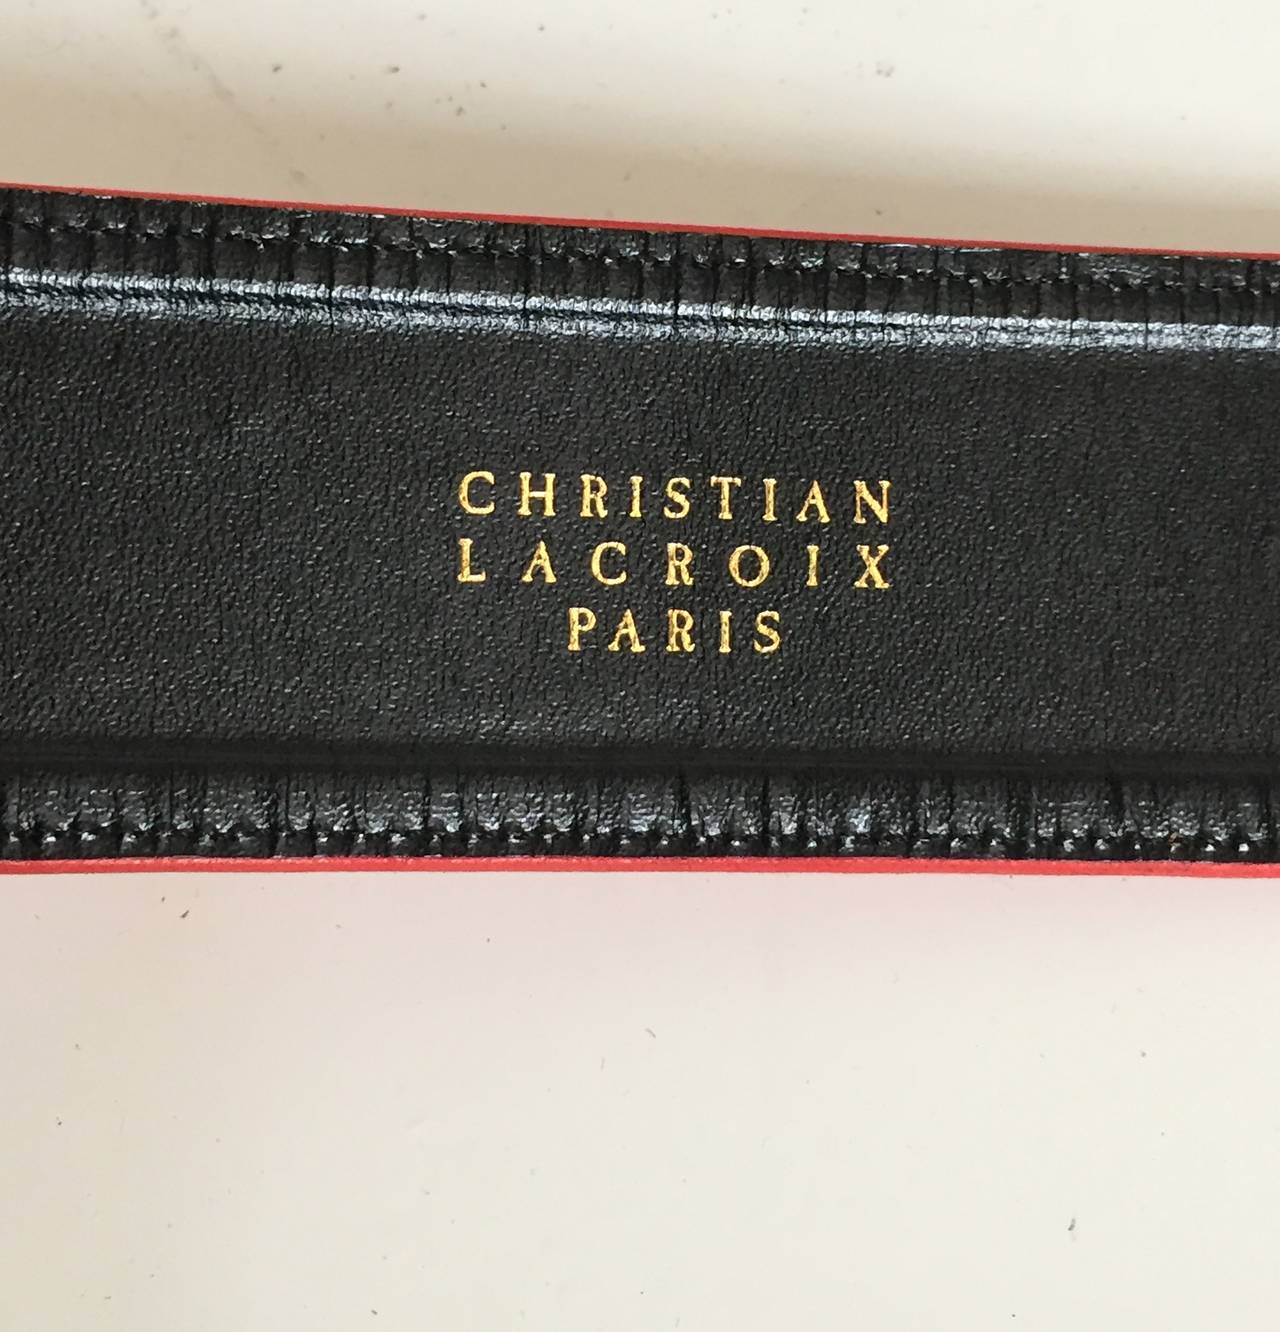 Christian Lacroix 1980s coral leather belt size 4 / 6. 1